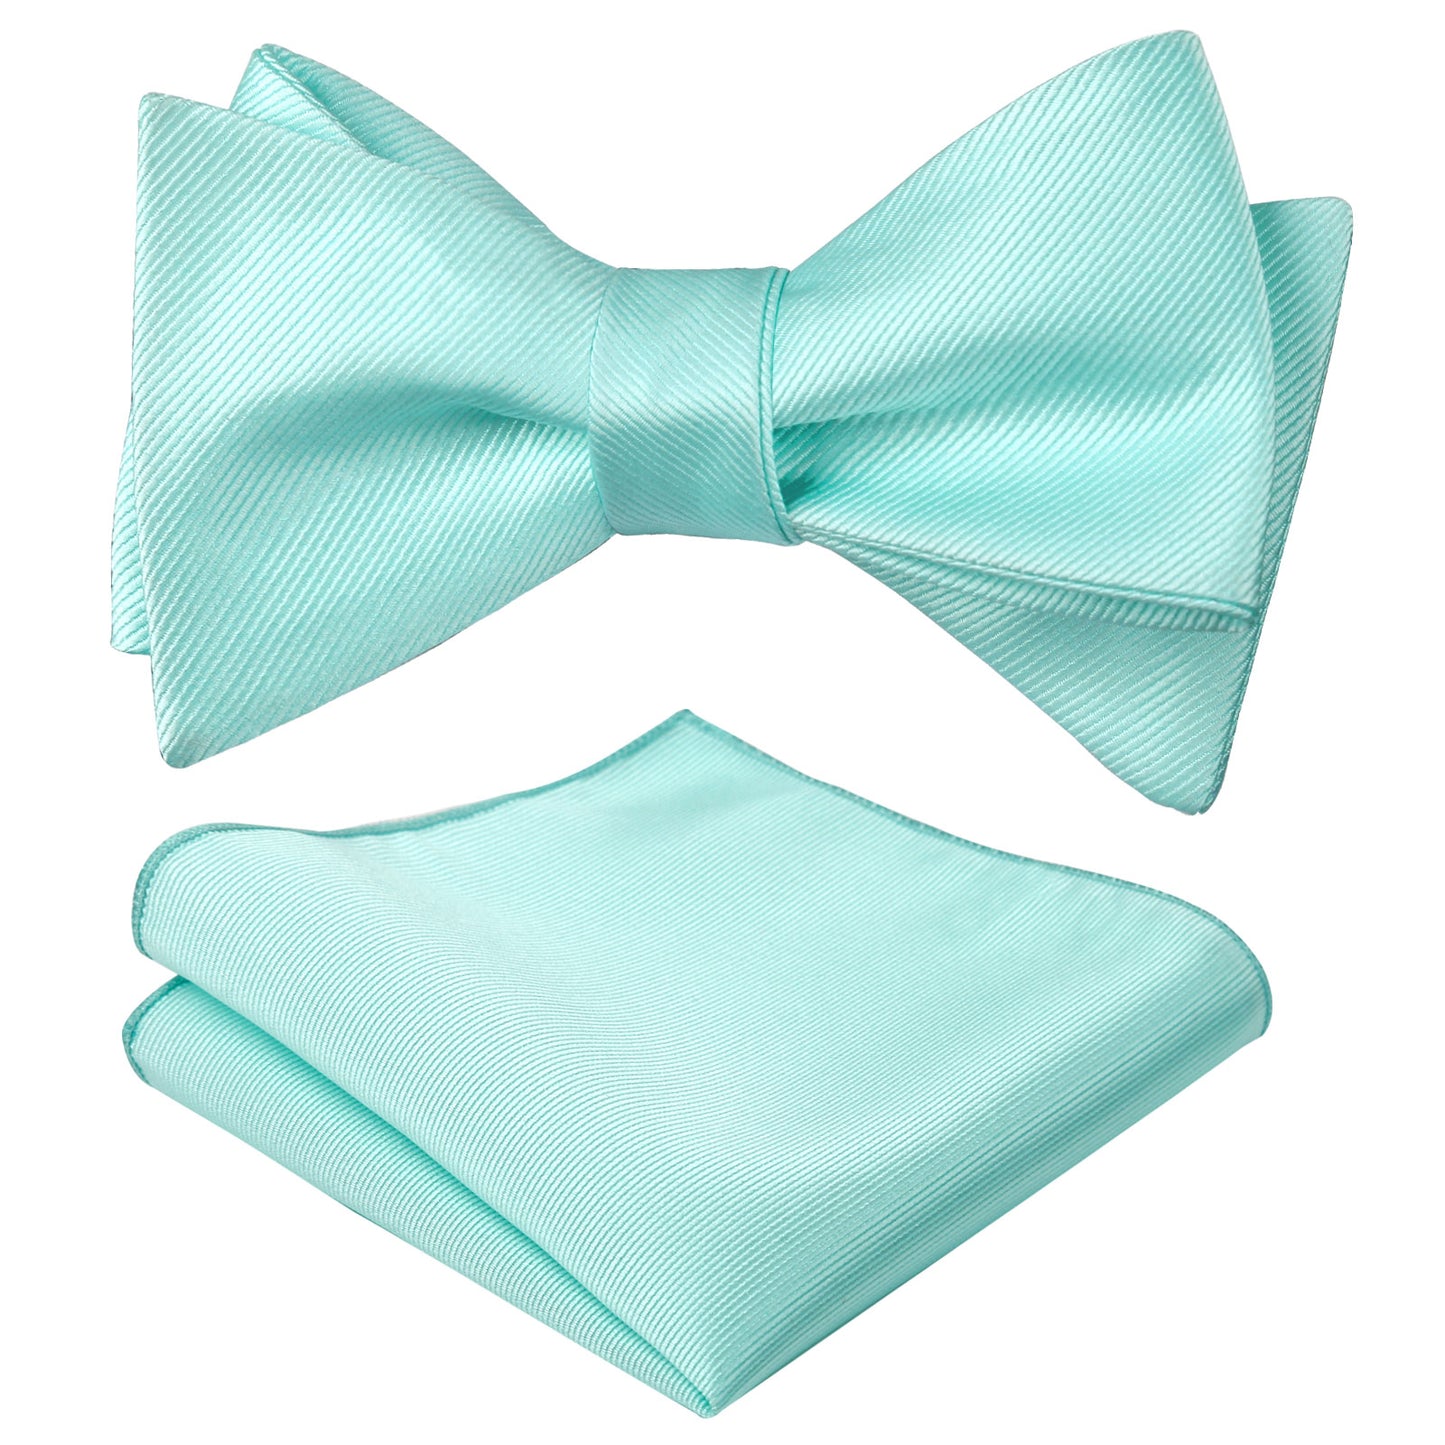 Men's Solid Self-tied Bow Tie and Handkerchief Set #055